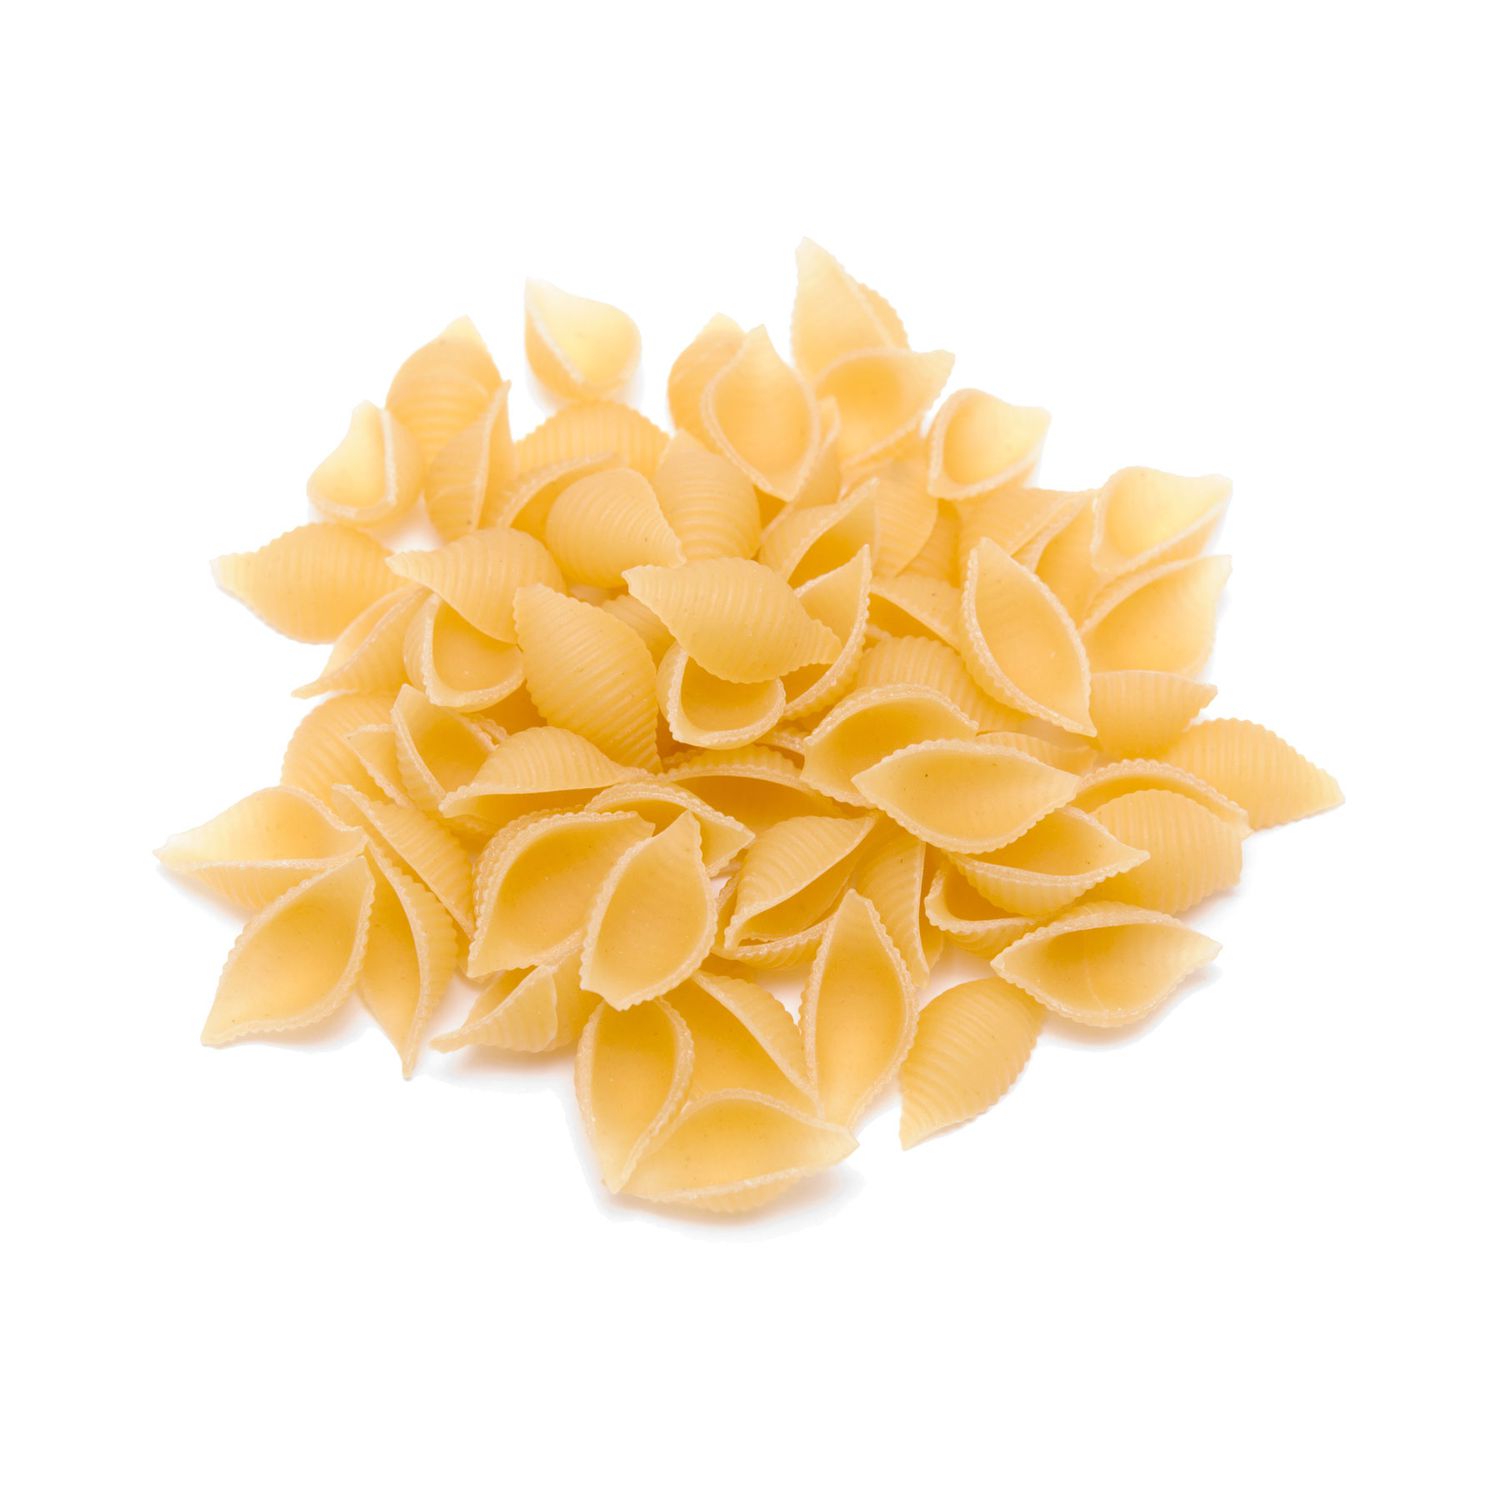 Types of pasta noodles - shells